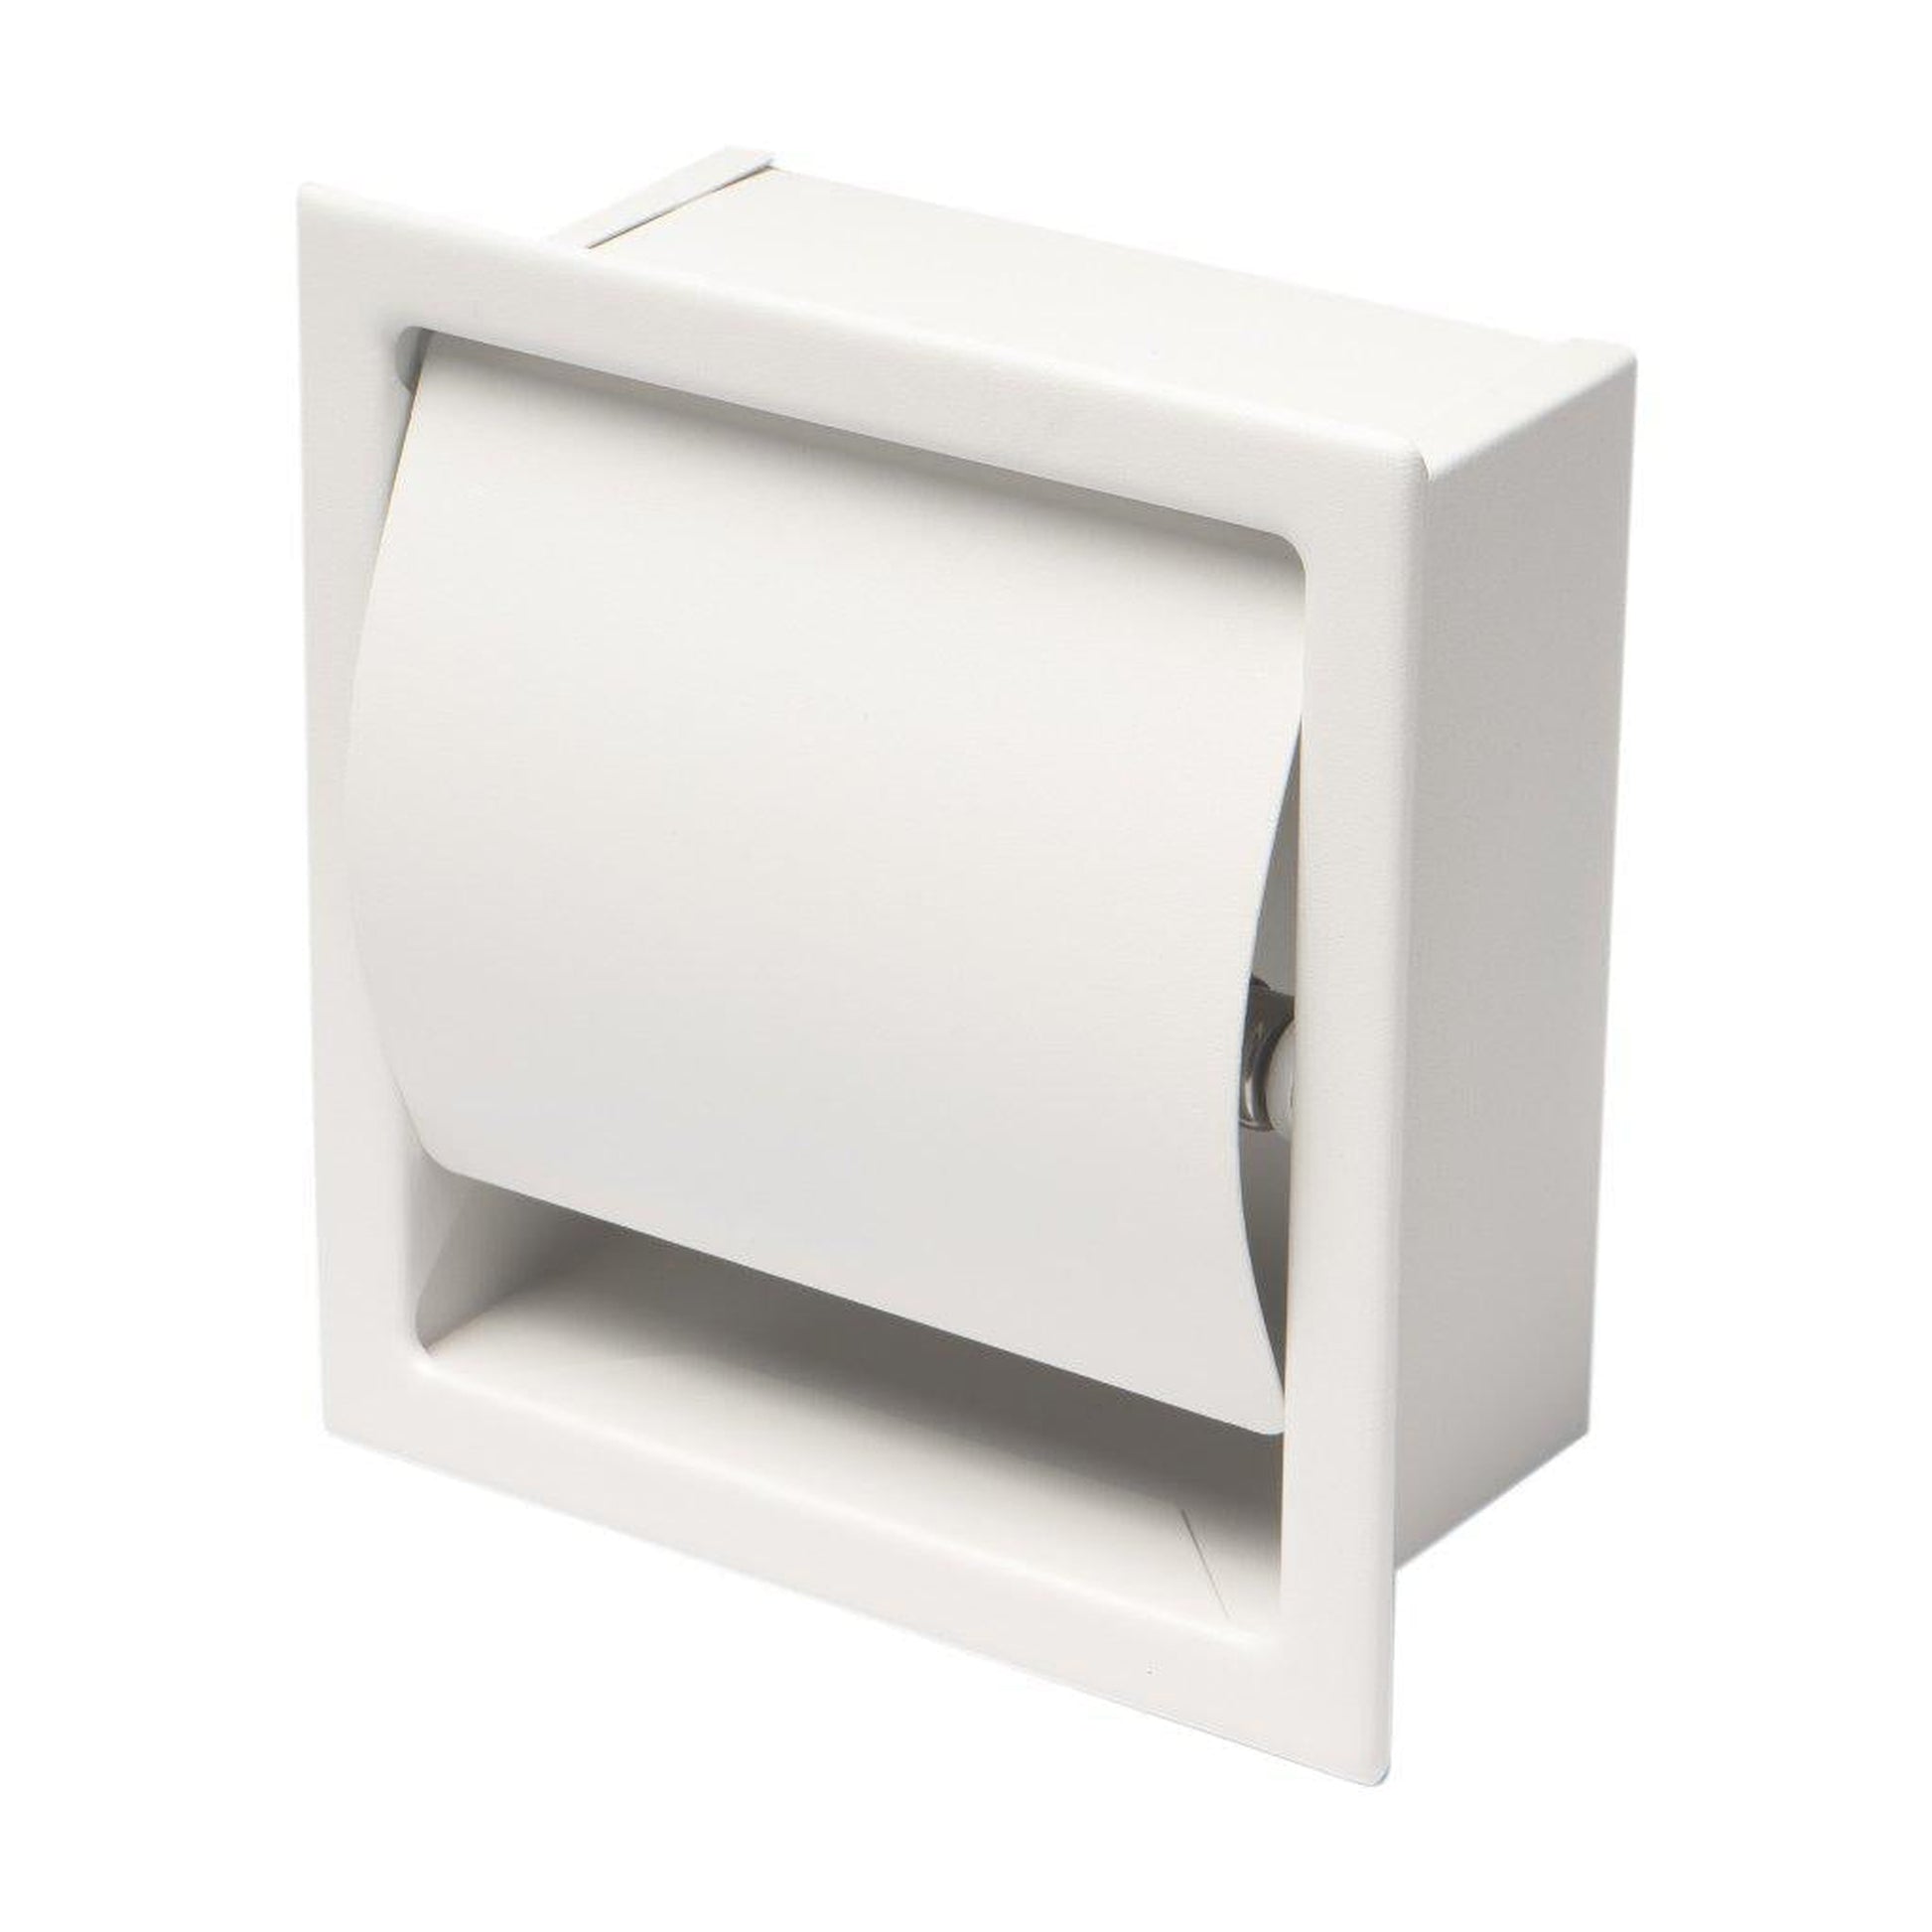 Recessed Toilet Paper Holder in Matte Black